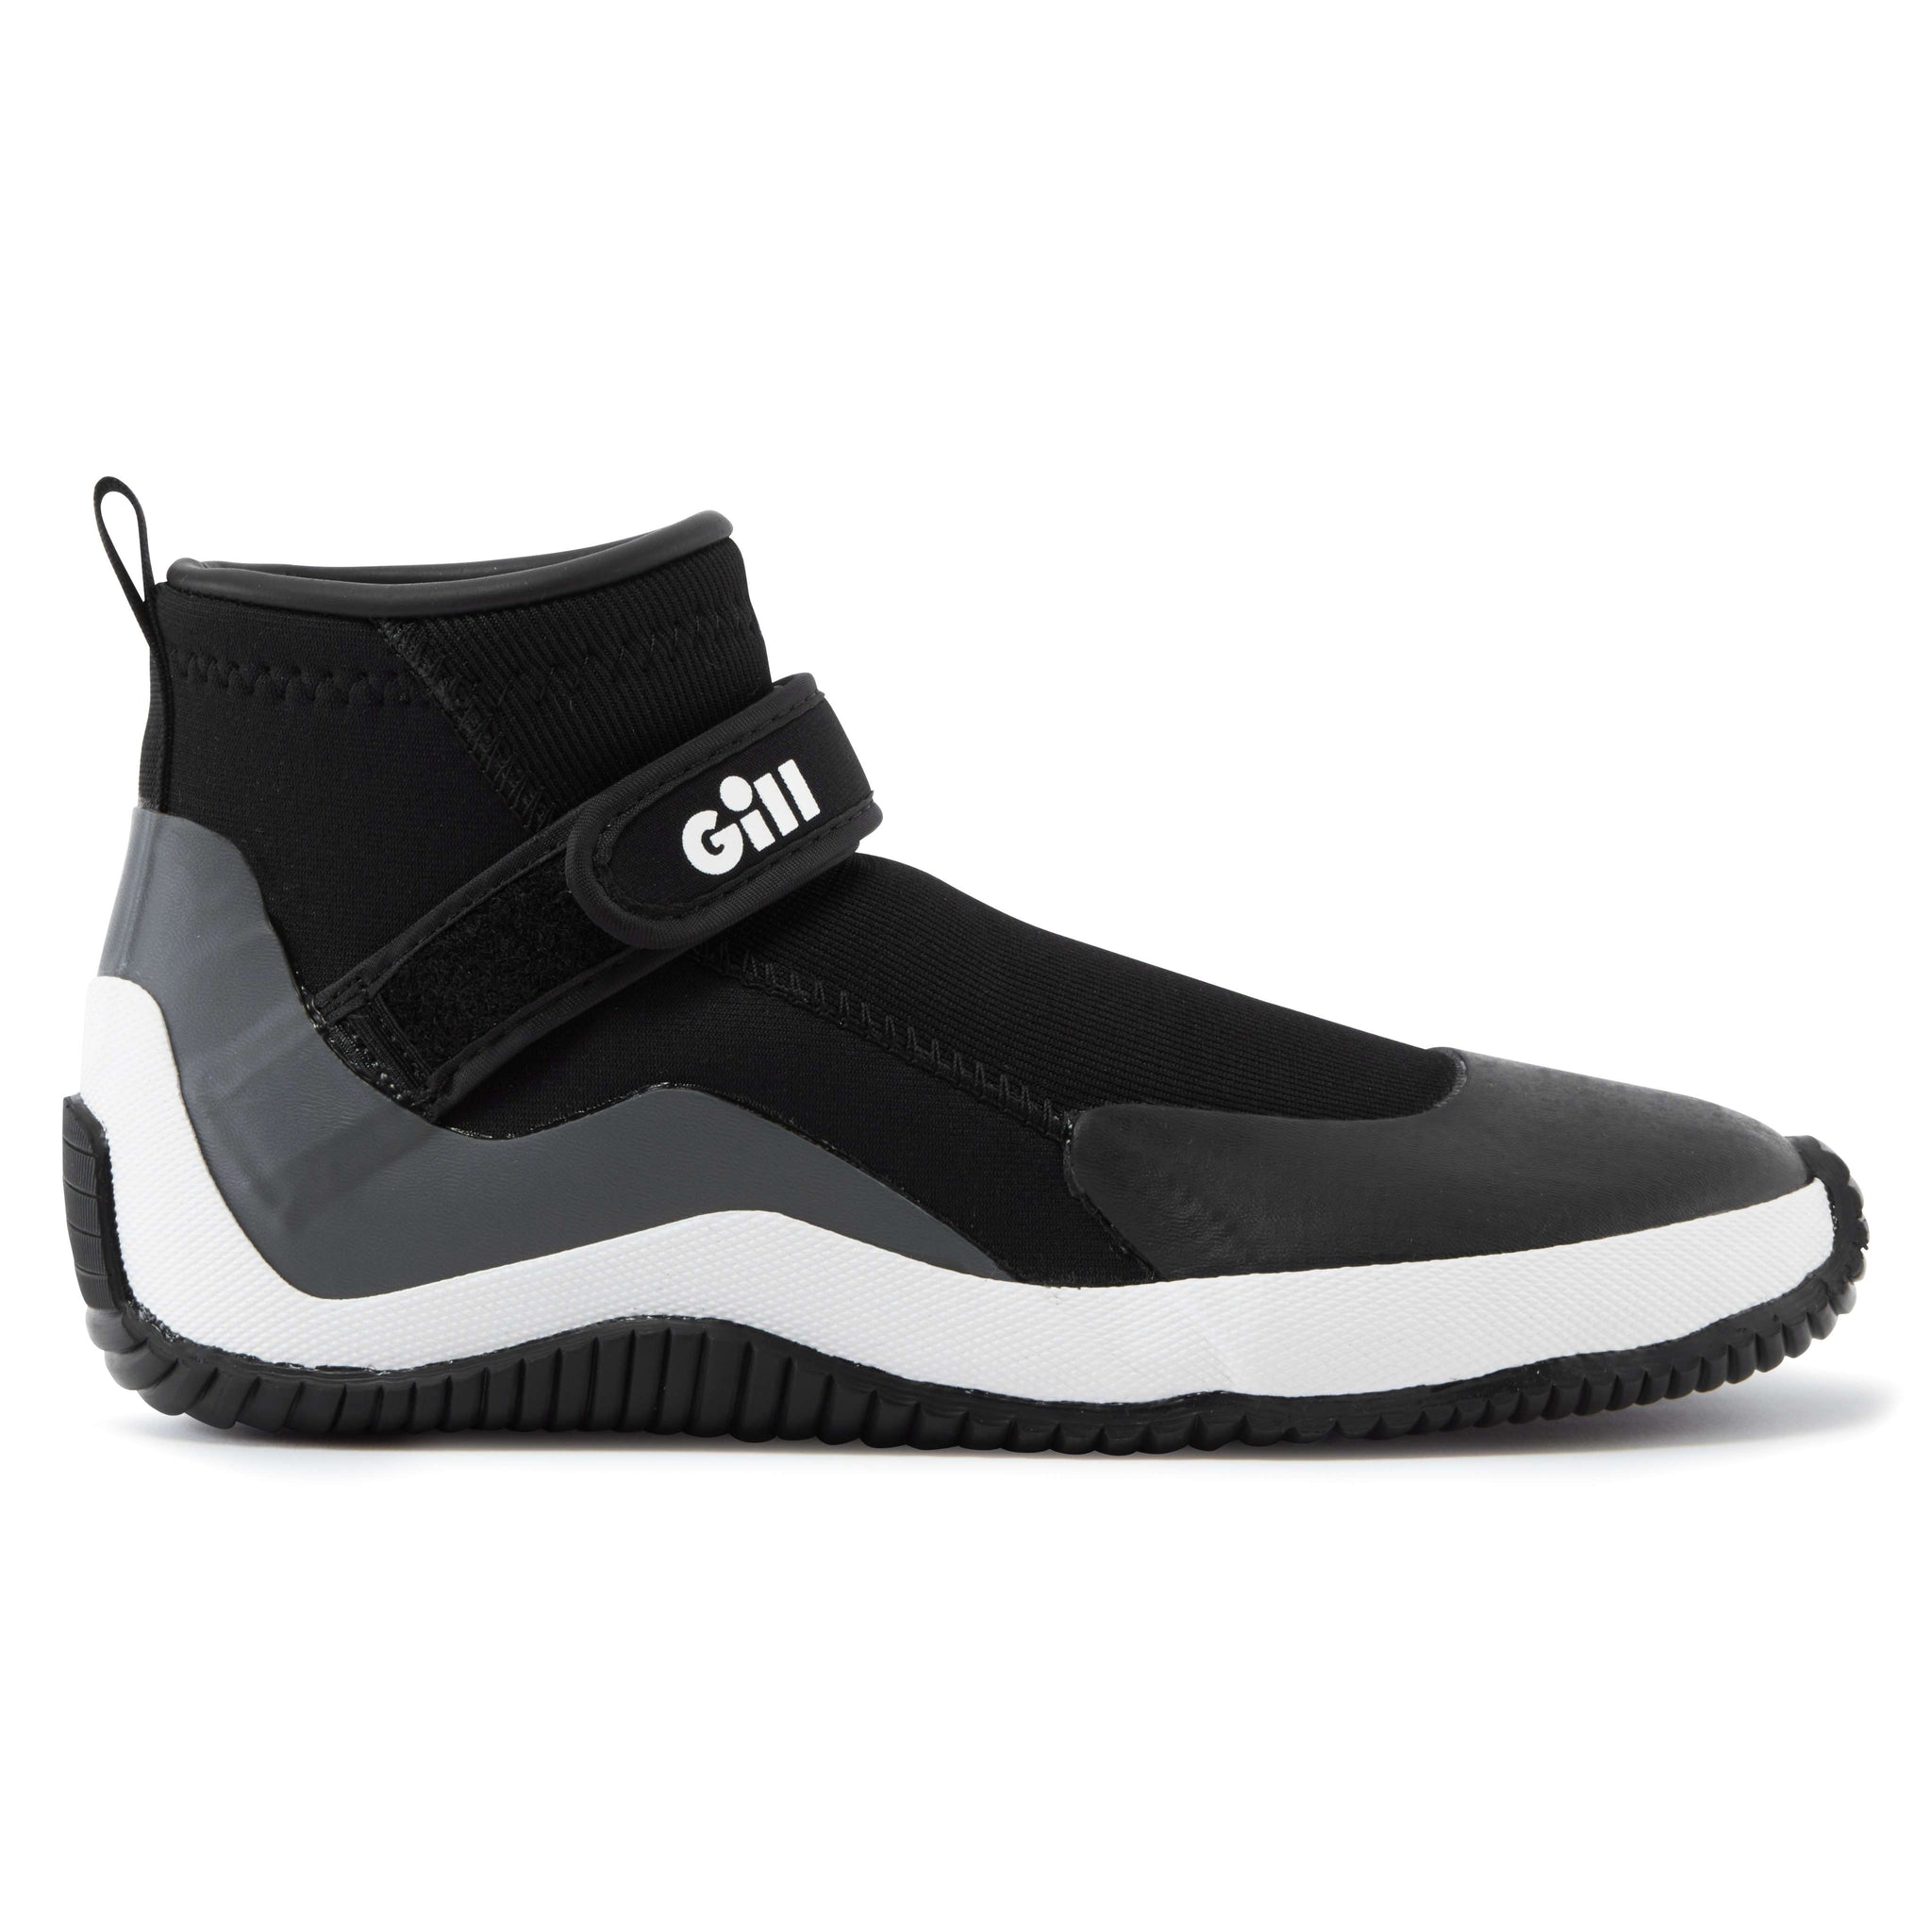 Gill - Aquatech Shoes